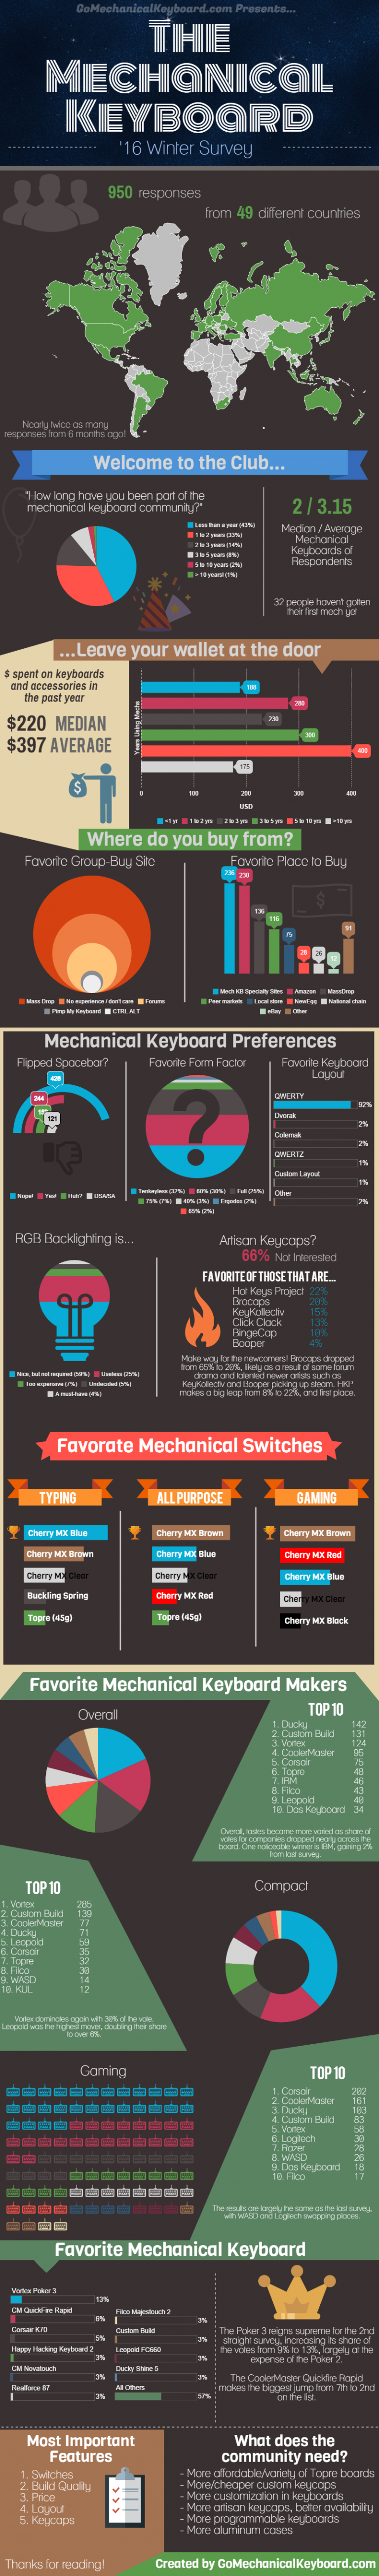 Mechanical Gaming Keyboard Infographic